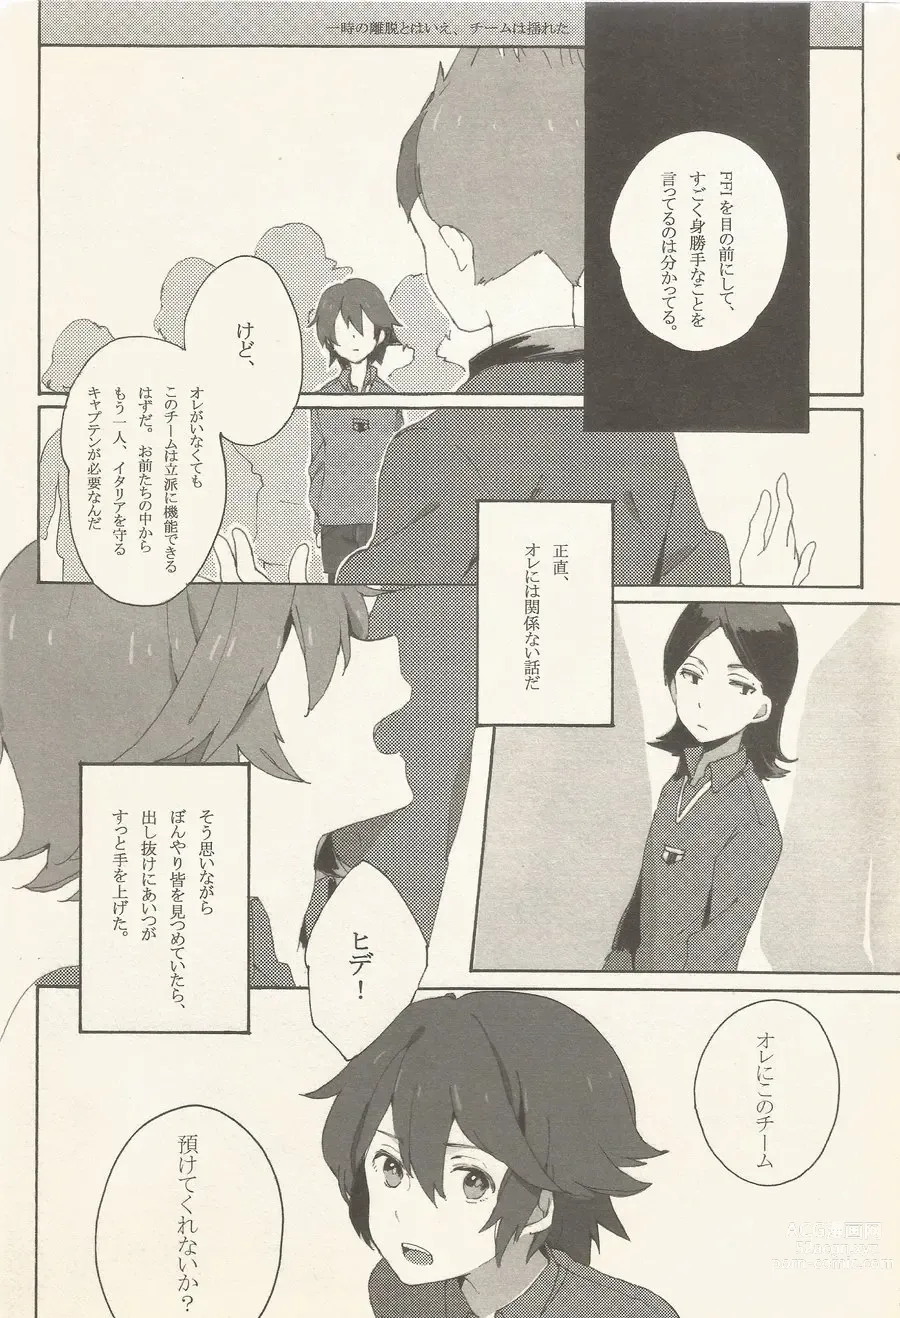 Page 5 of doujinshi border‐line phobic